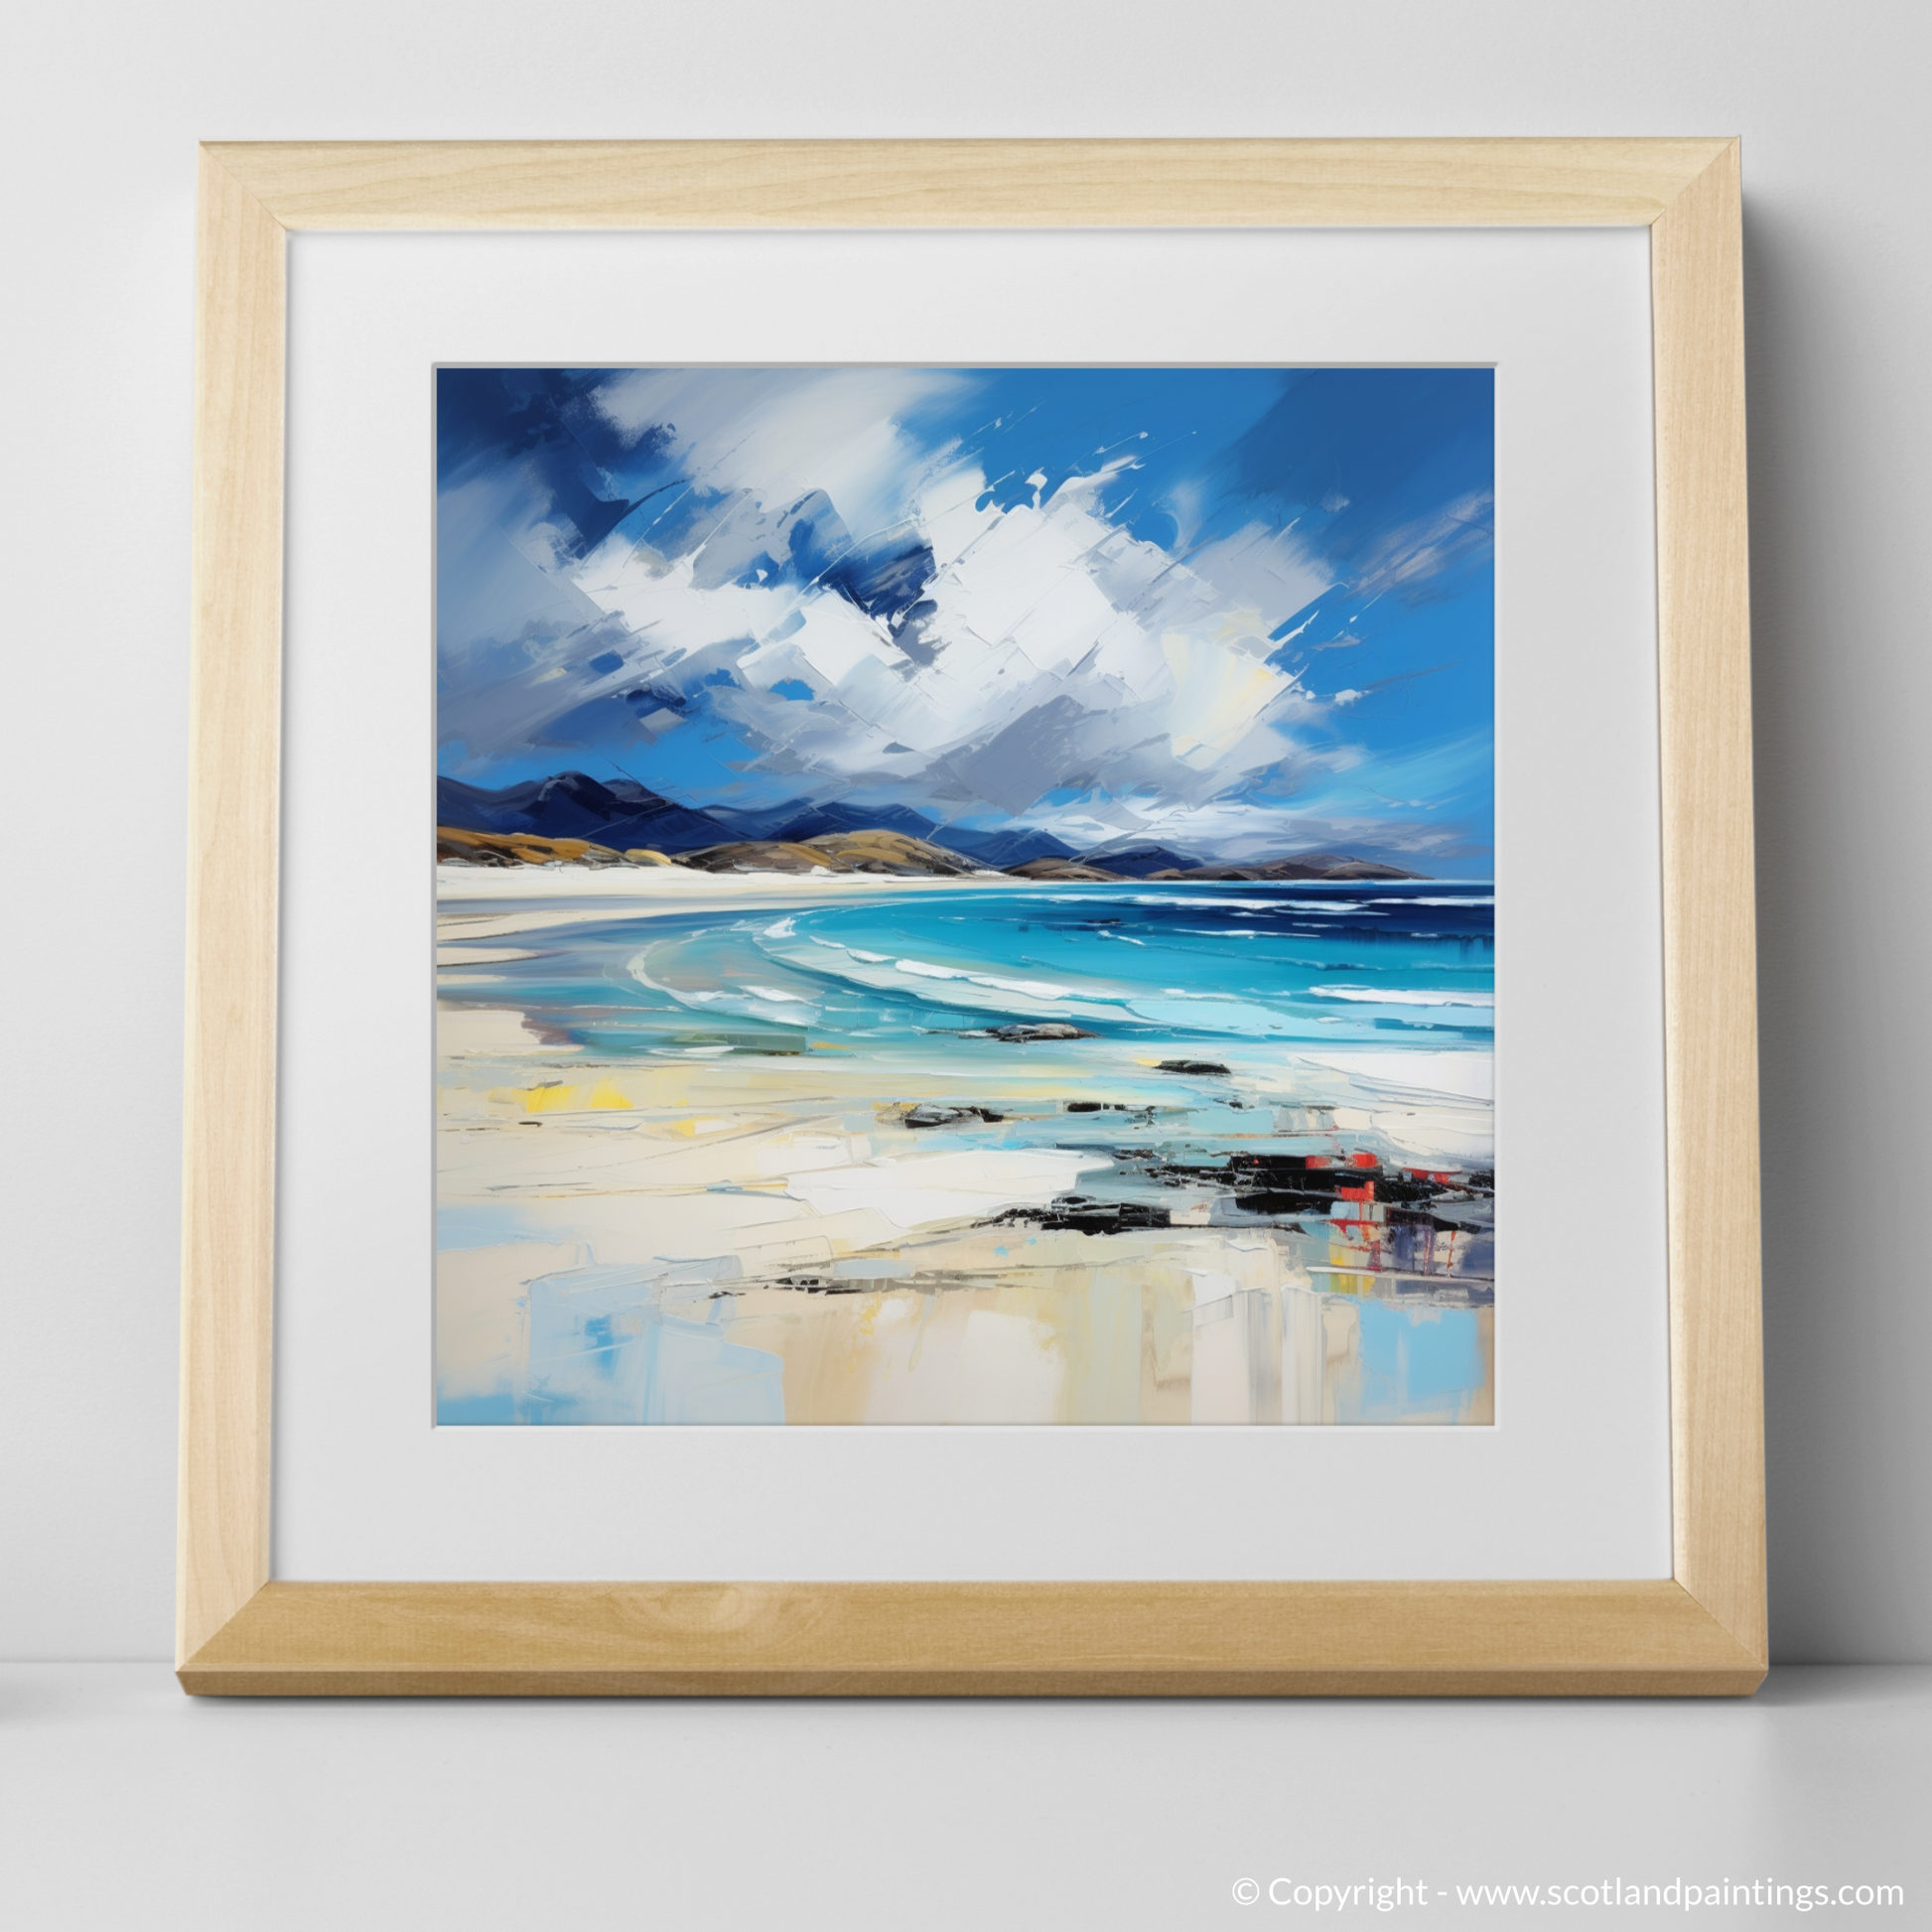 Art Print of Luskentyre Beach, Isle of Harris with a natural frame